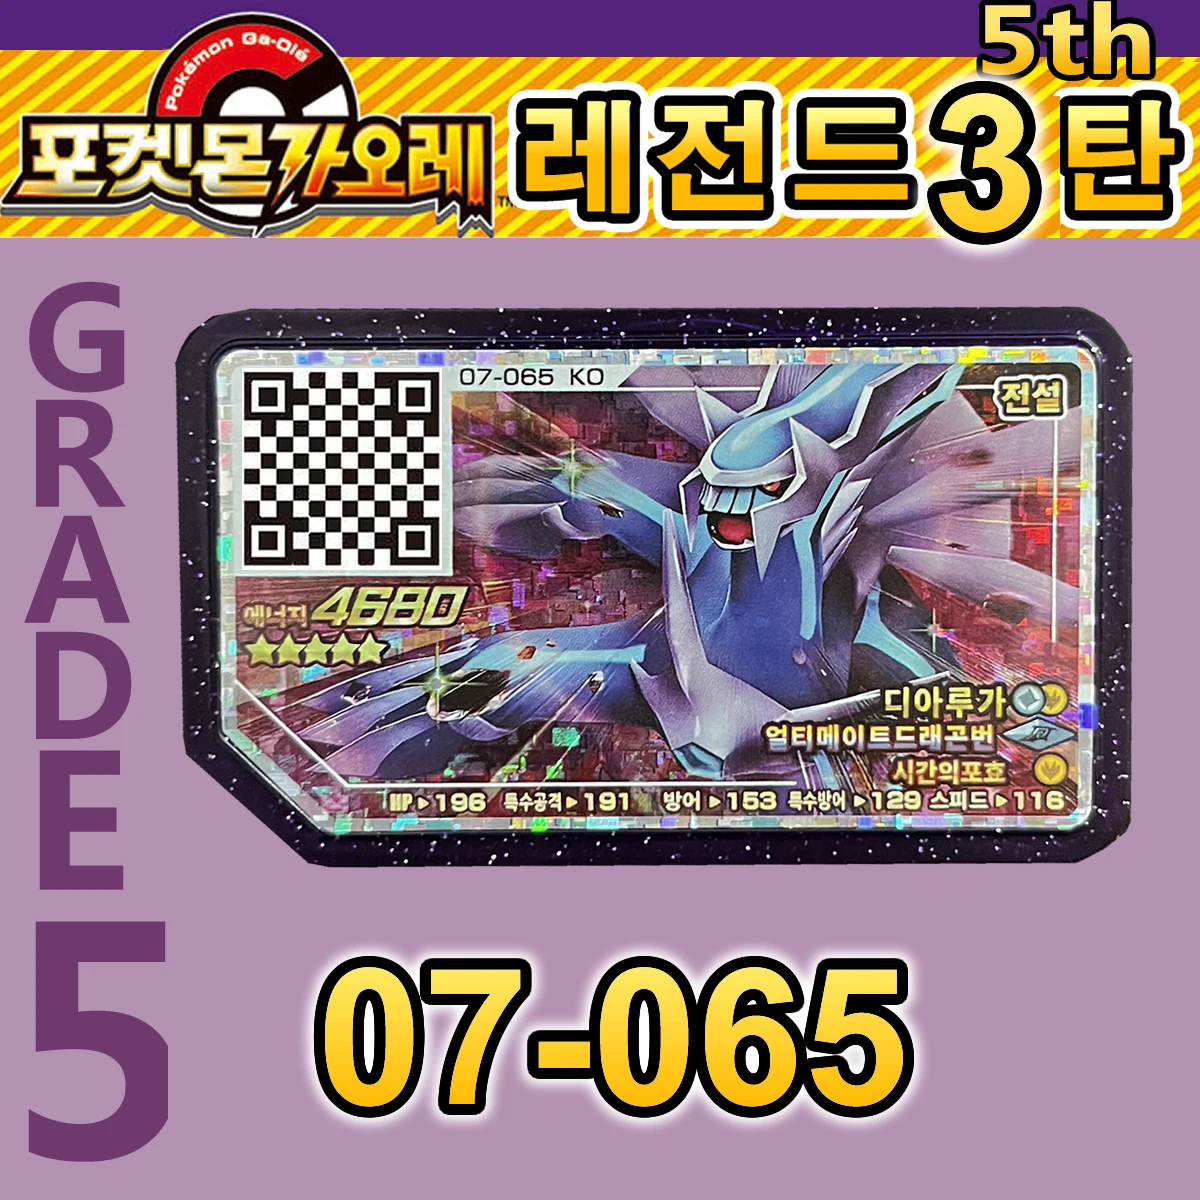 

Korean Legend 3 5 Stars Pokemon Gaole Set Arcade Pokémon Ga-Olé Game Disc Card Gaore Ga Ole 포켓몬 가오레 레7탄 레전드 3탄 07-065 디아루가 5성